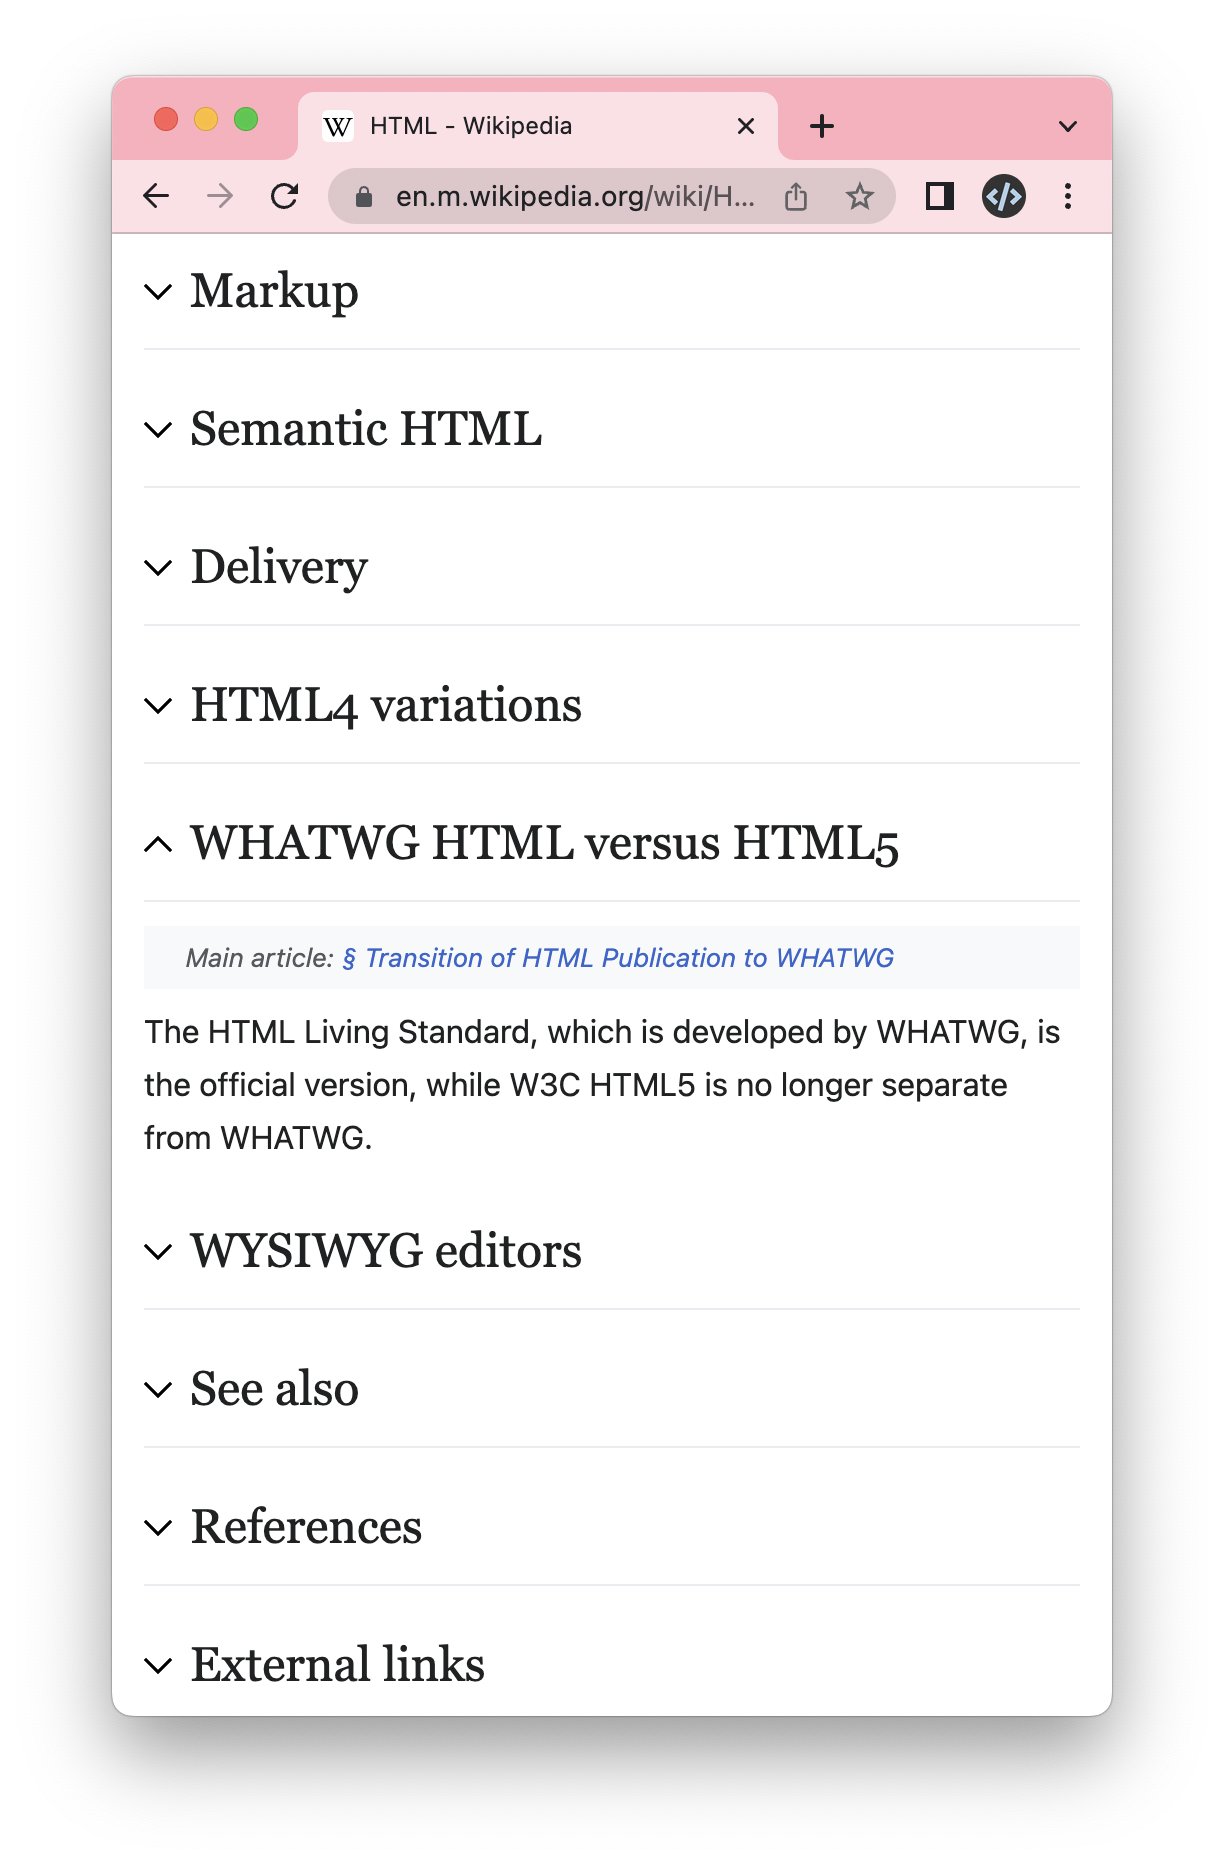 HTML Accordion on Wikipedia mobile website